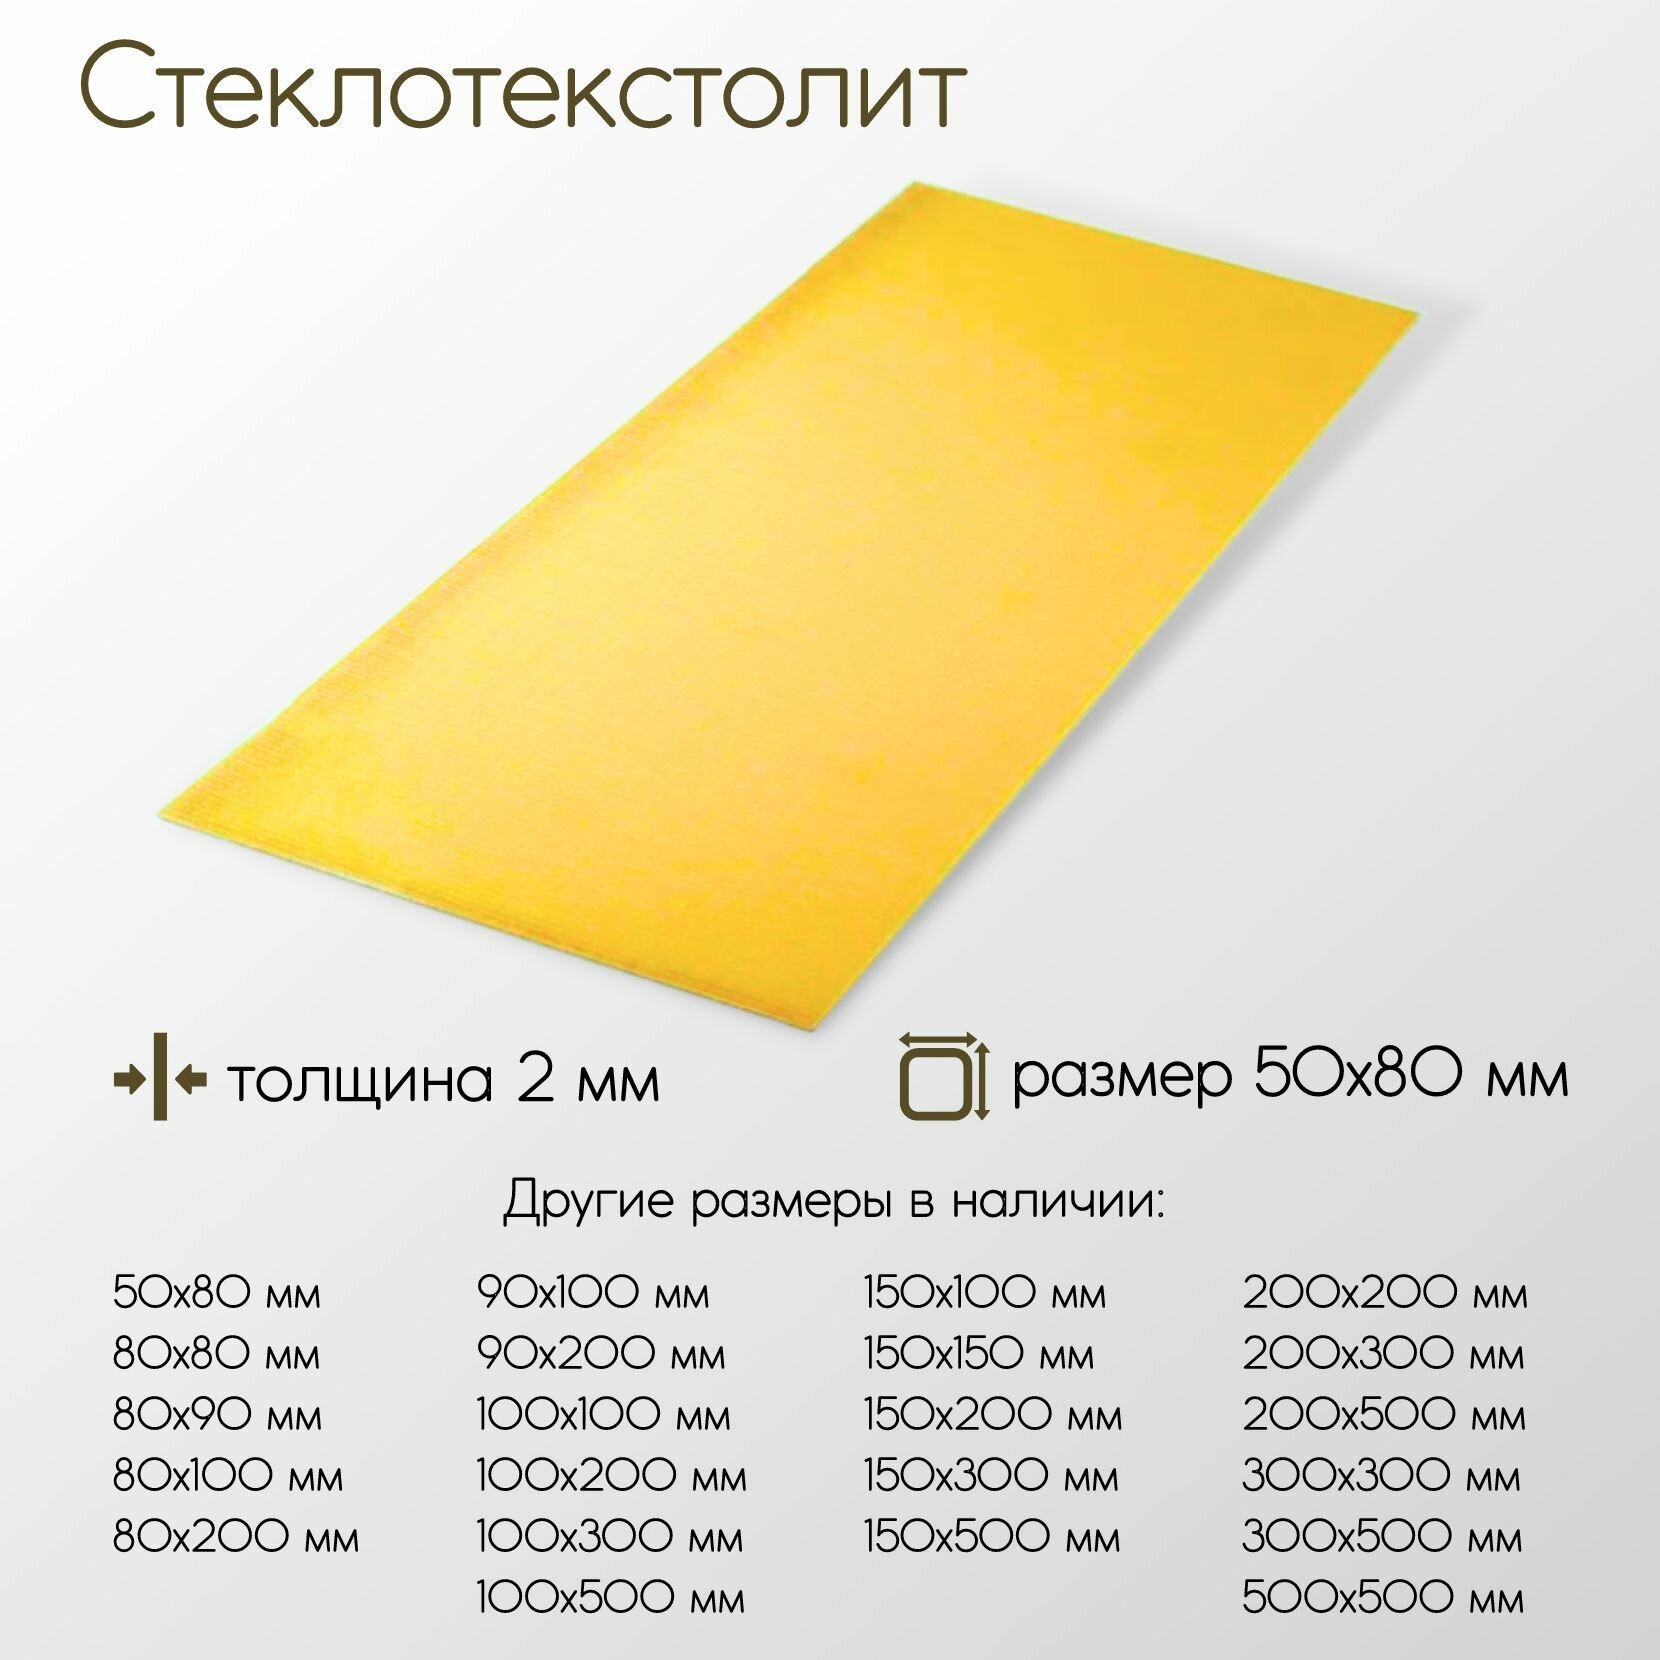 Стеклотекстолит стэф лист толщина 2 мм 2x500x500 мм